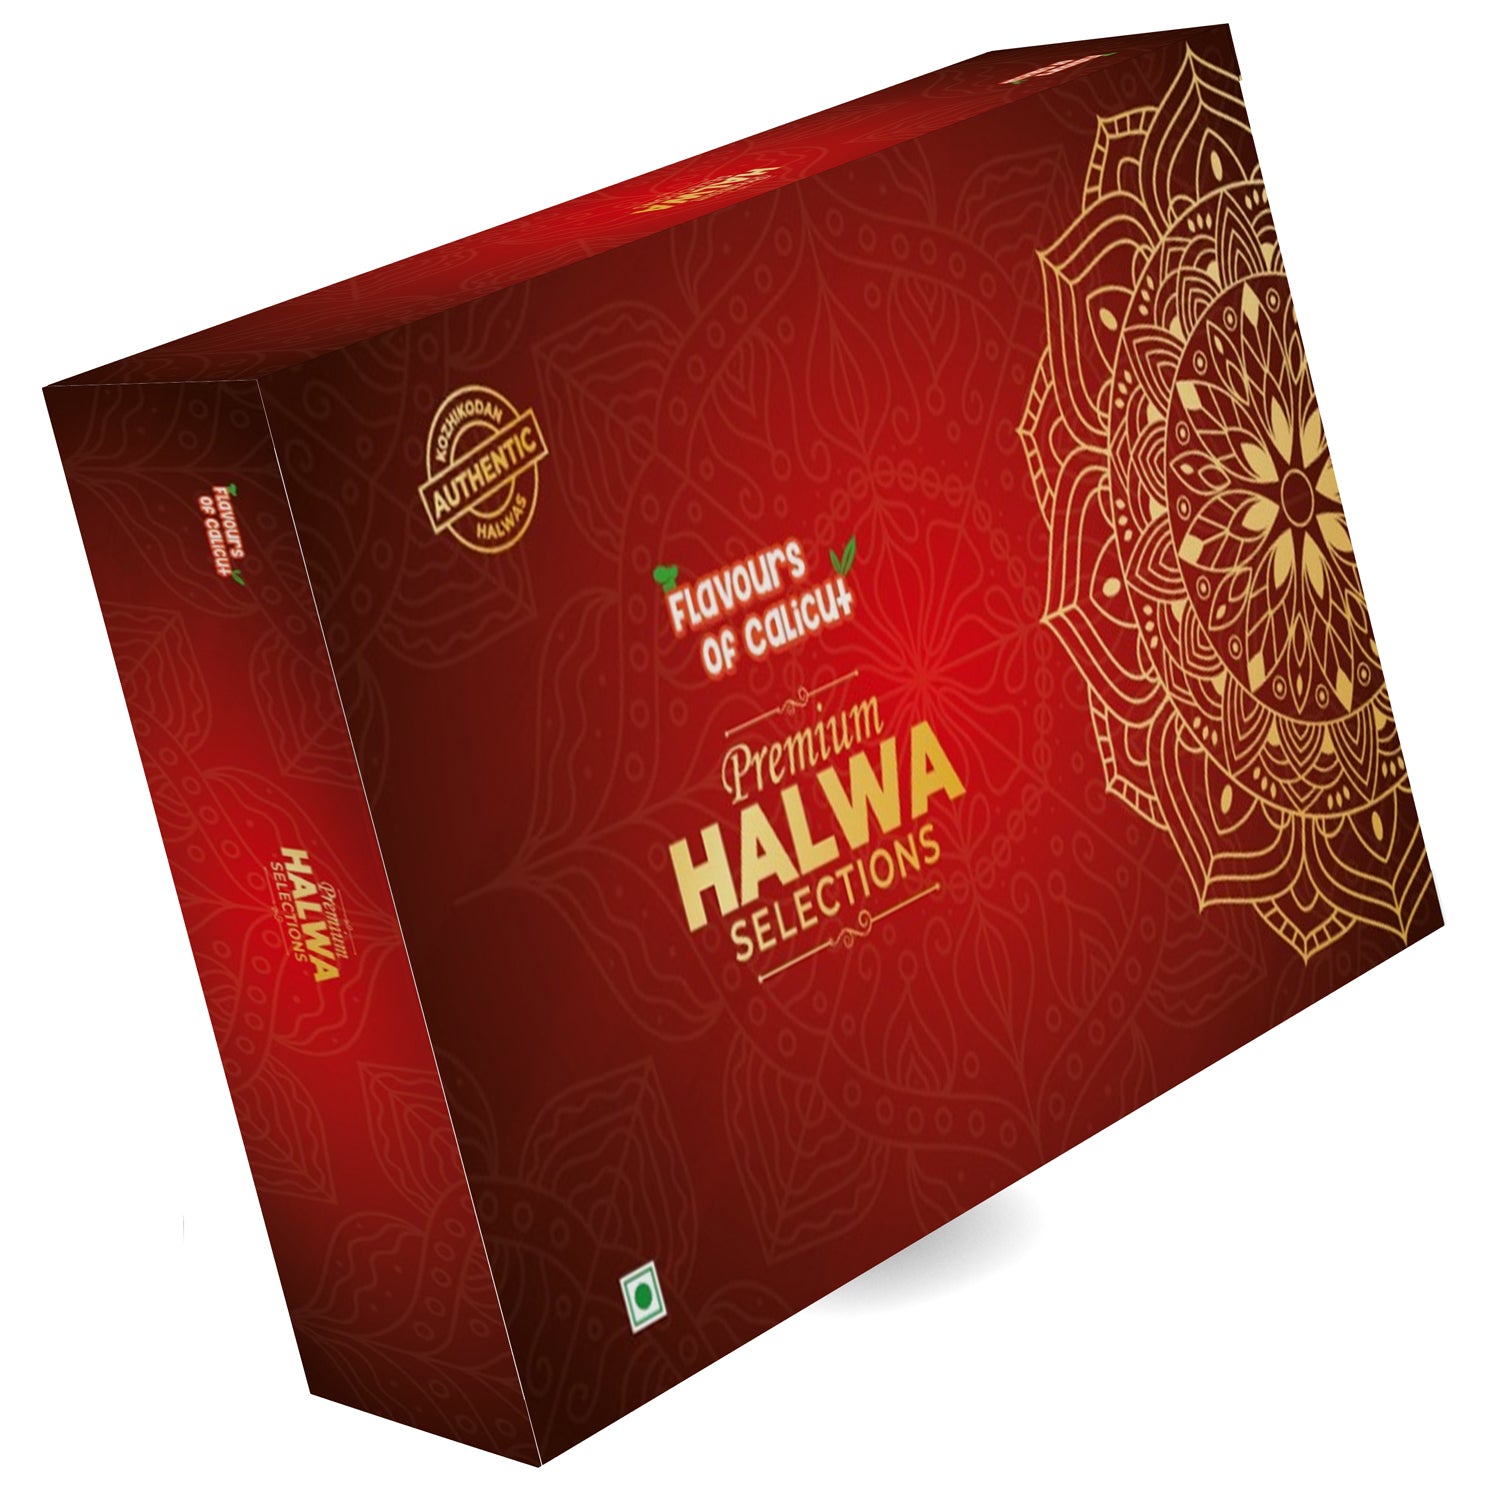 Premium Halwa Selections, 875g